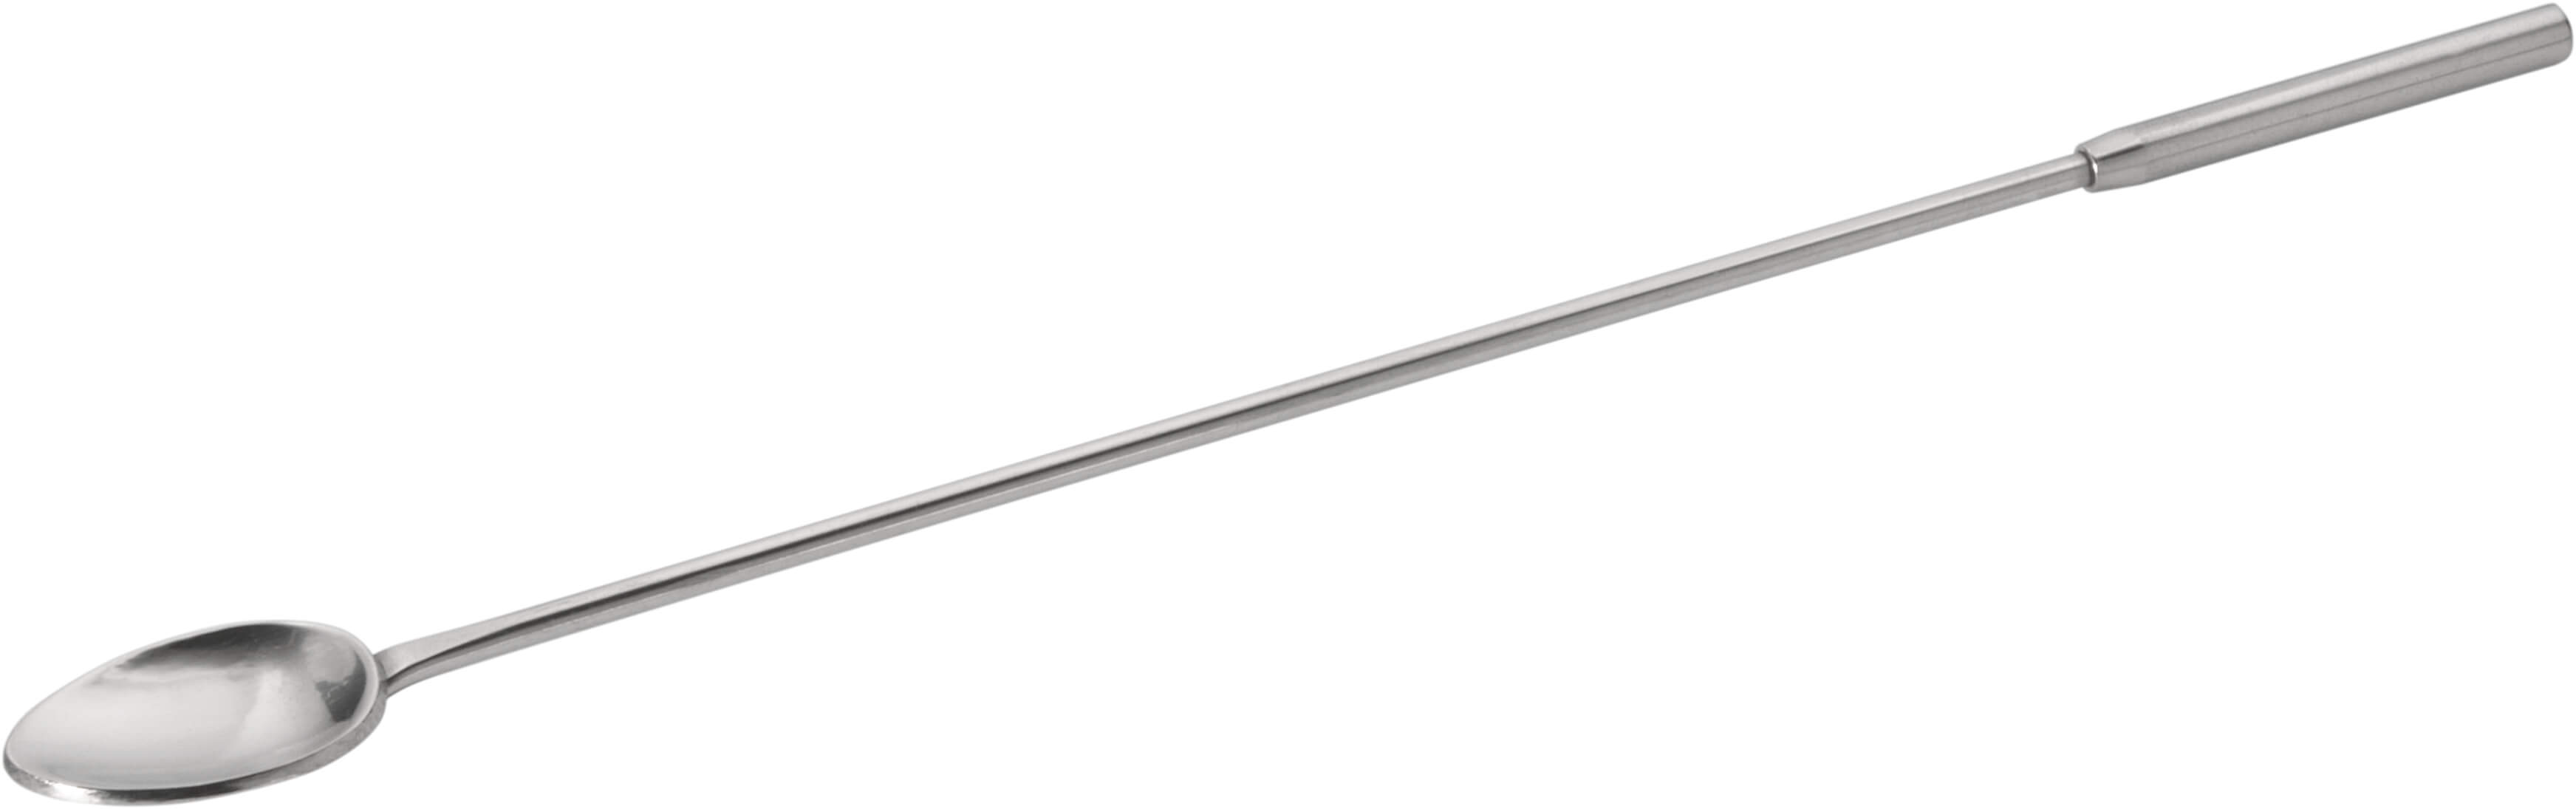 Bar spoon, flat end - 30cm